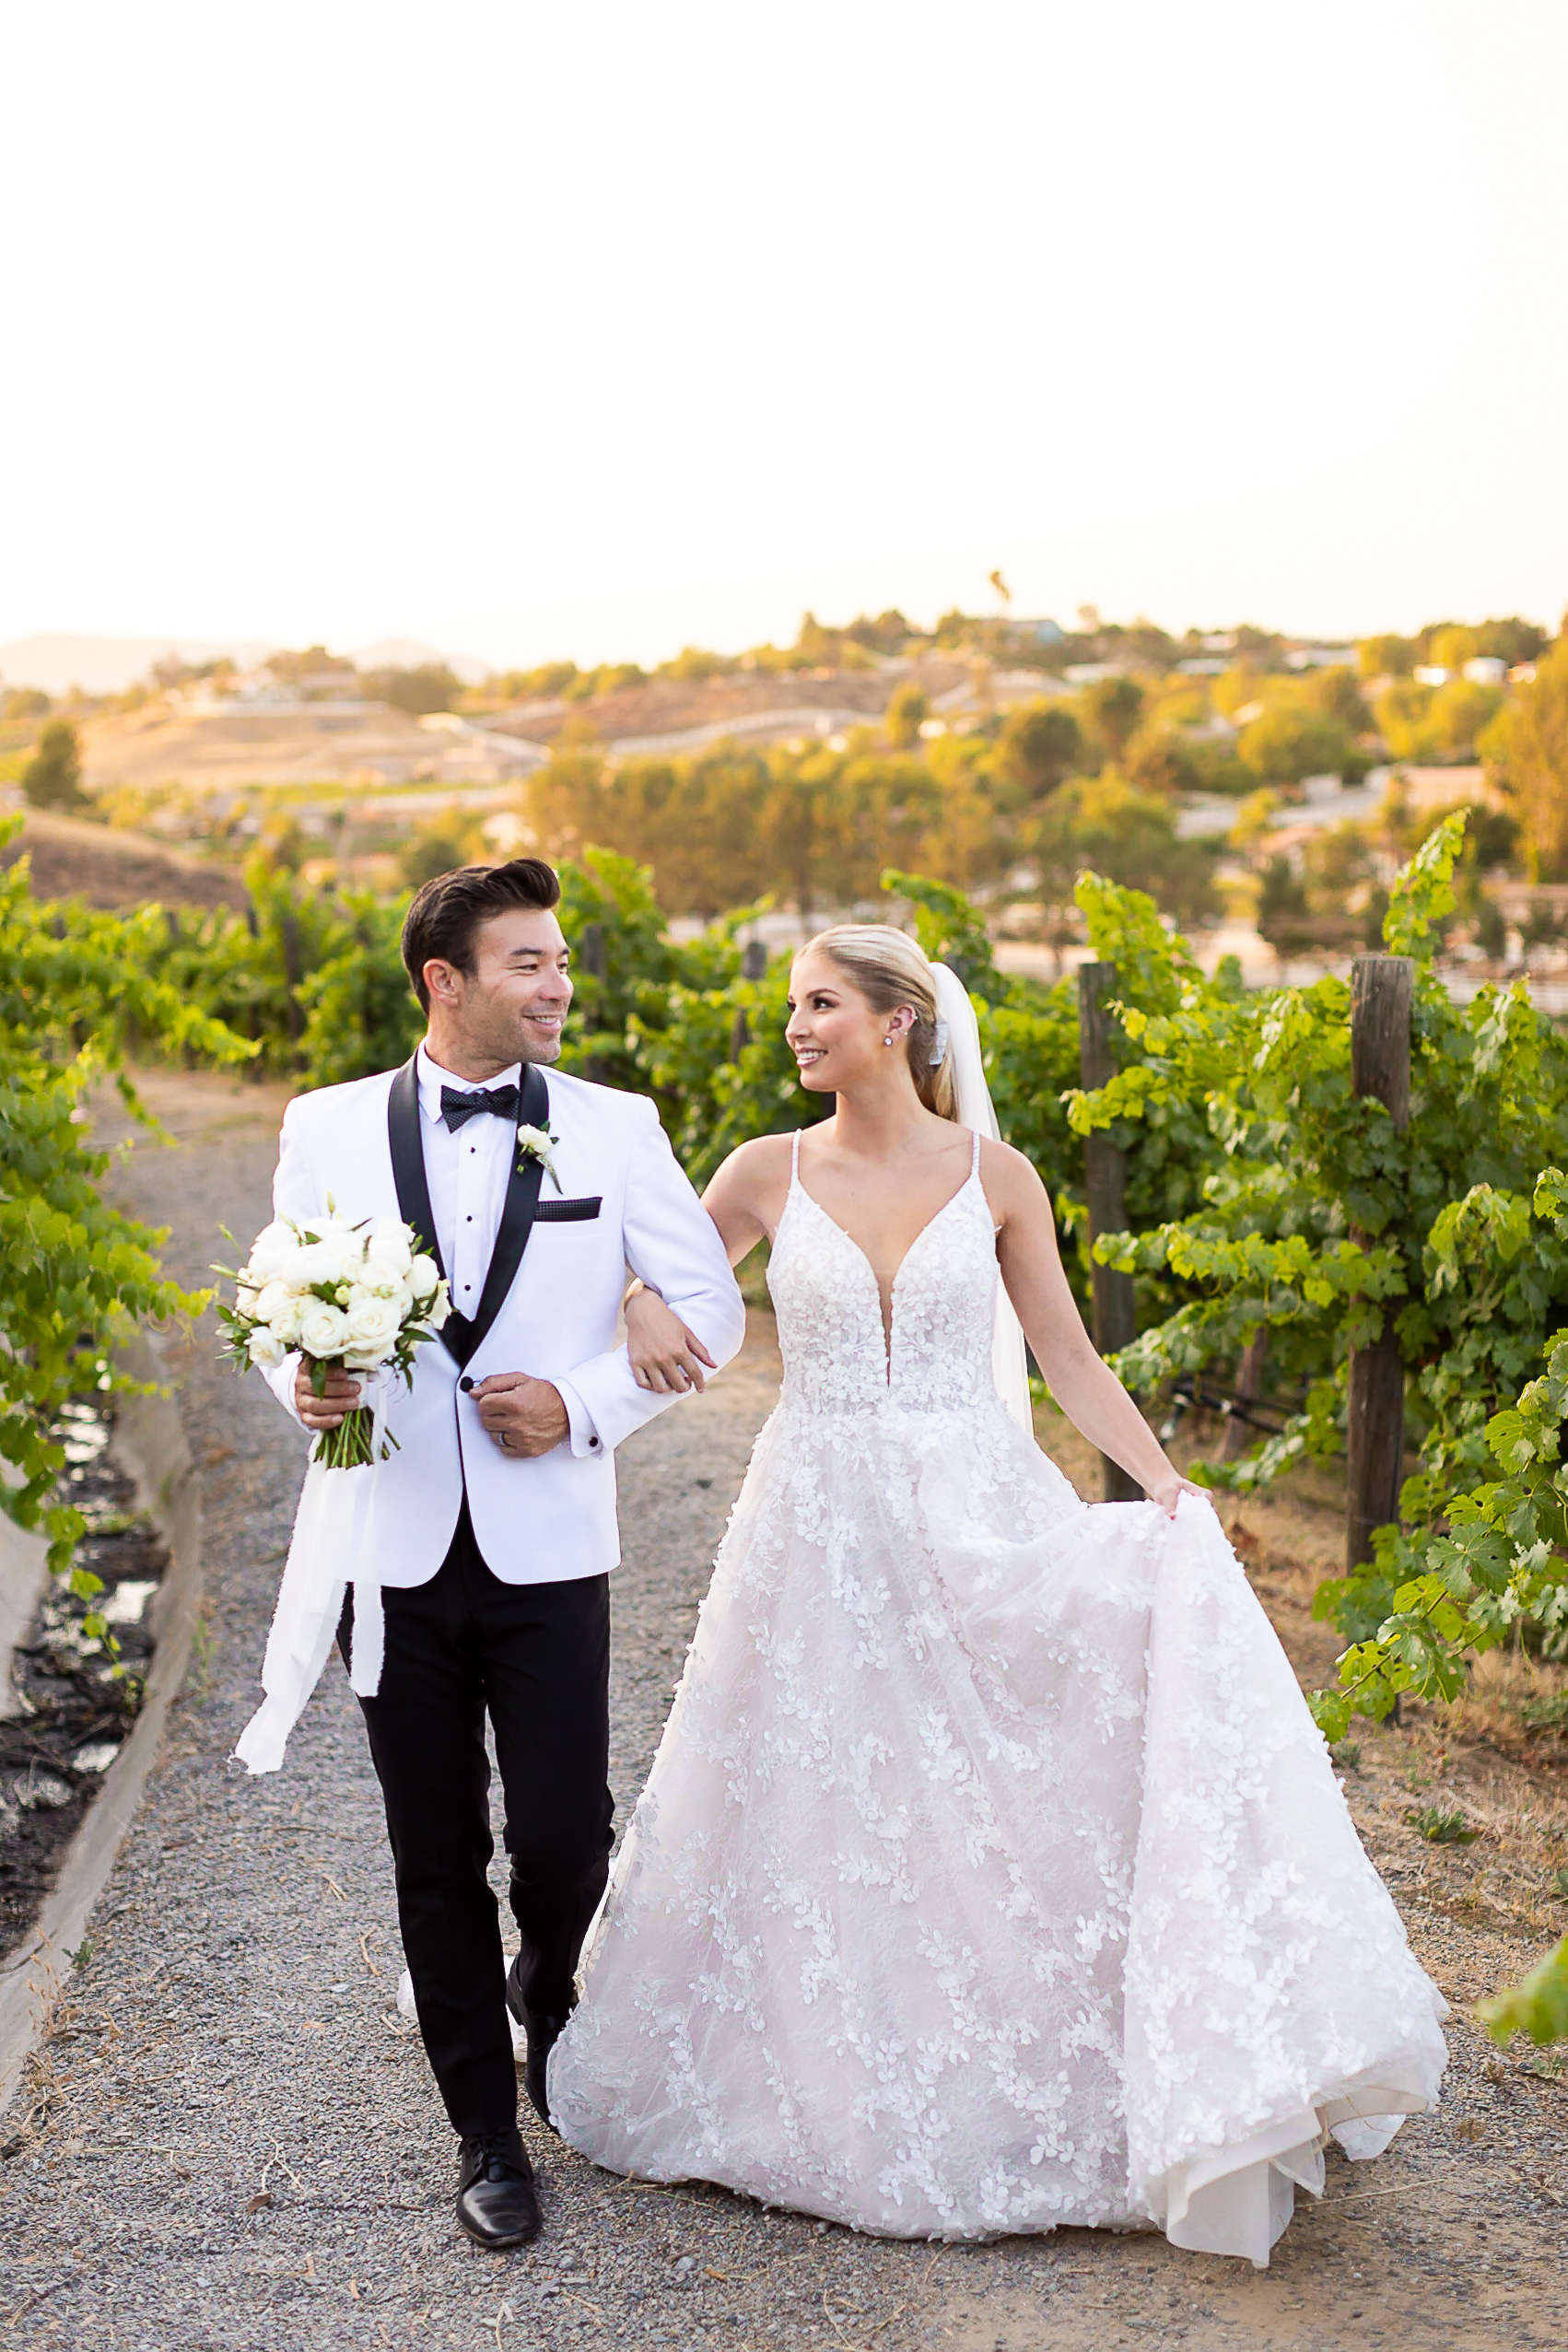 Temecula wedding walking in vineyards at oak hill winery estate